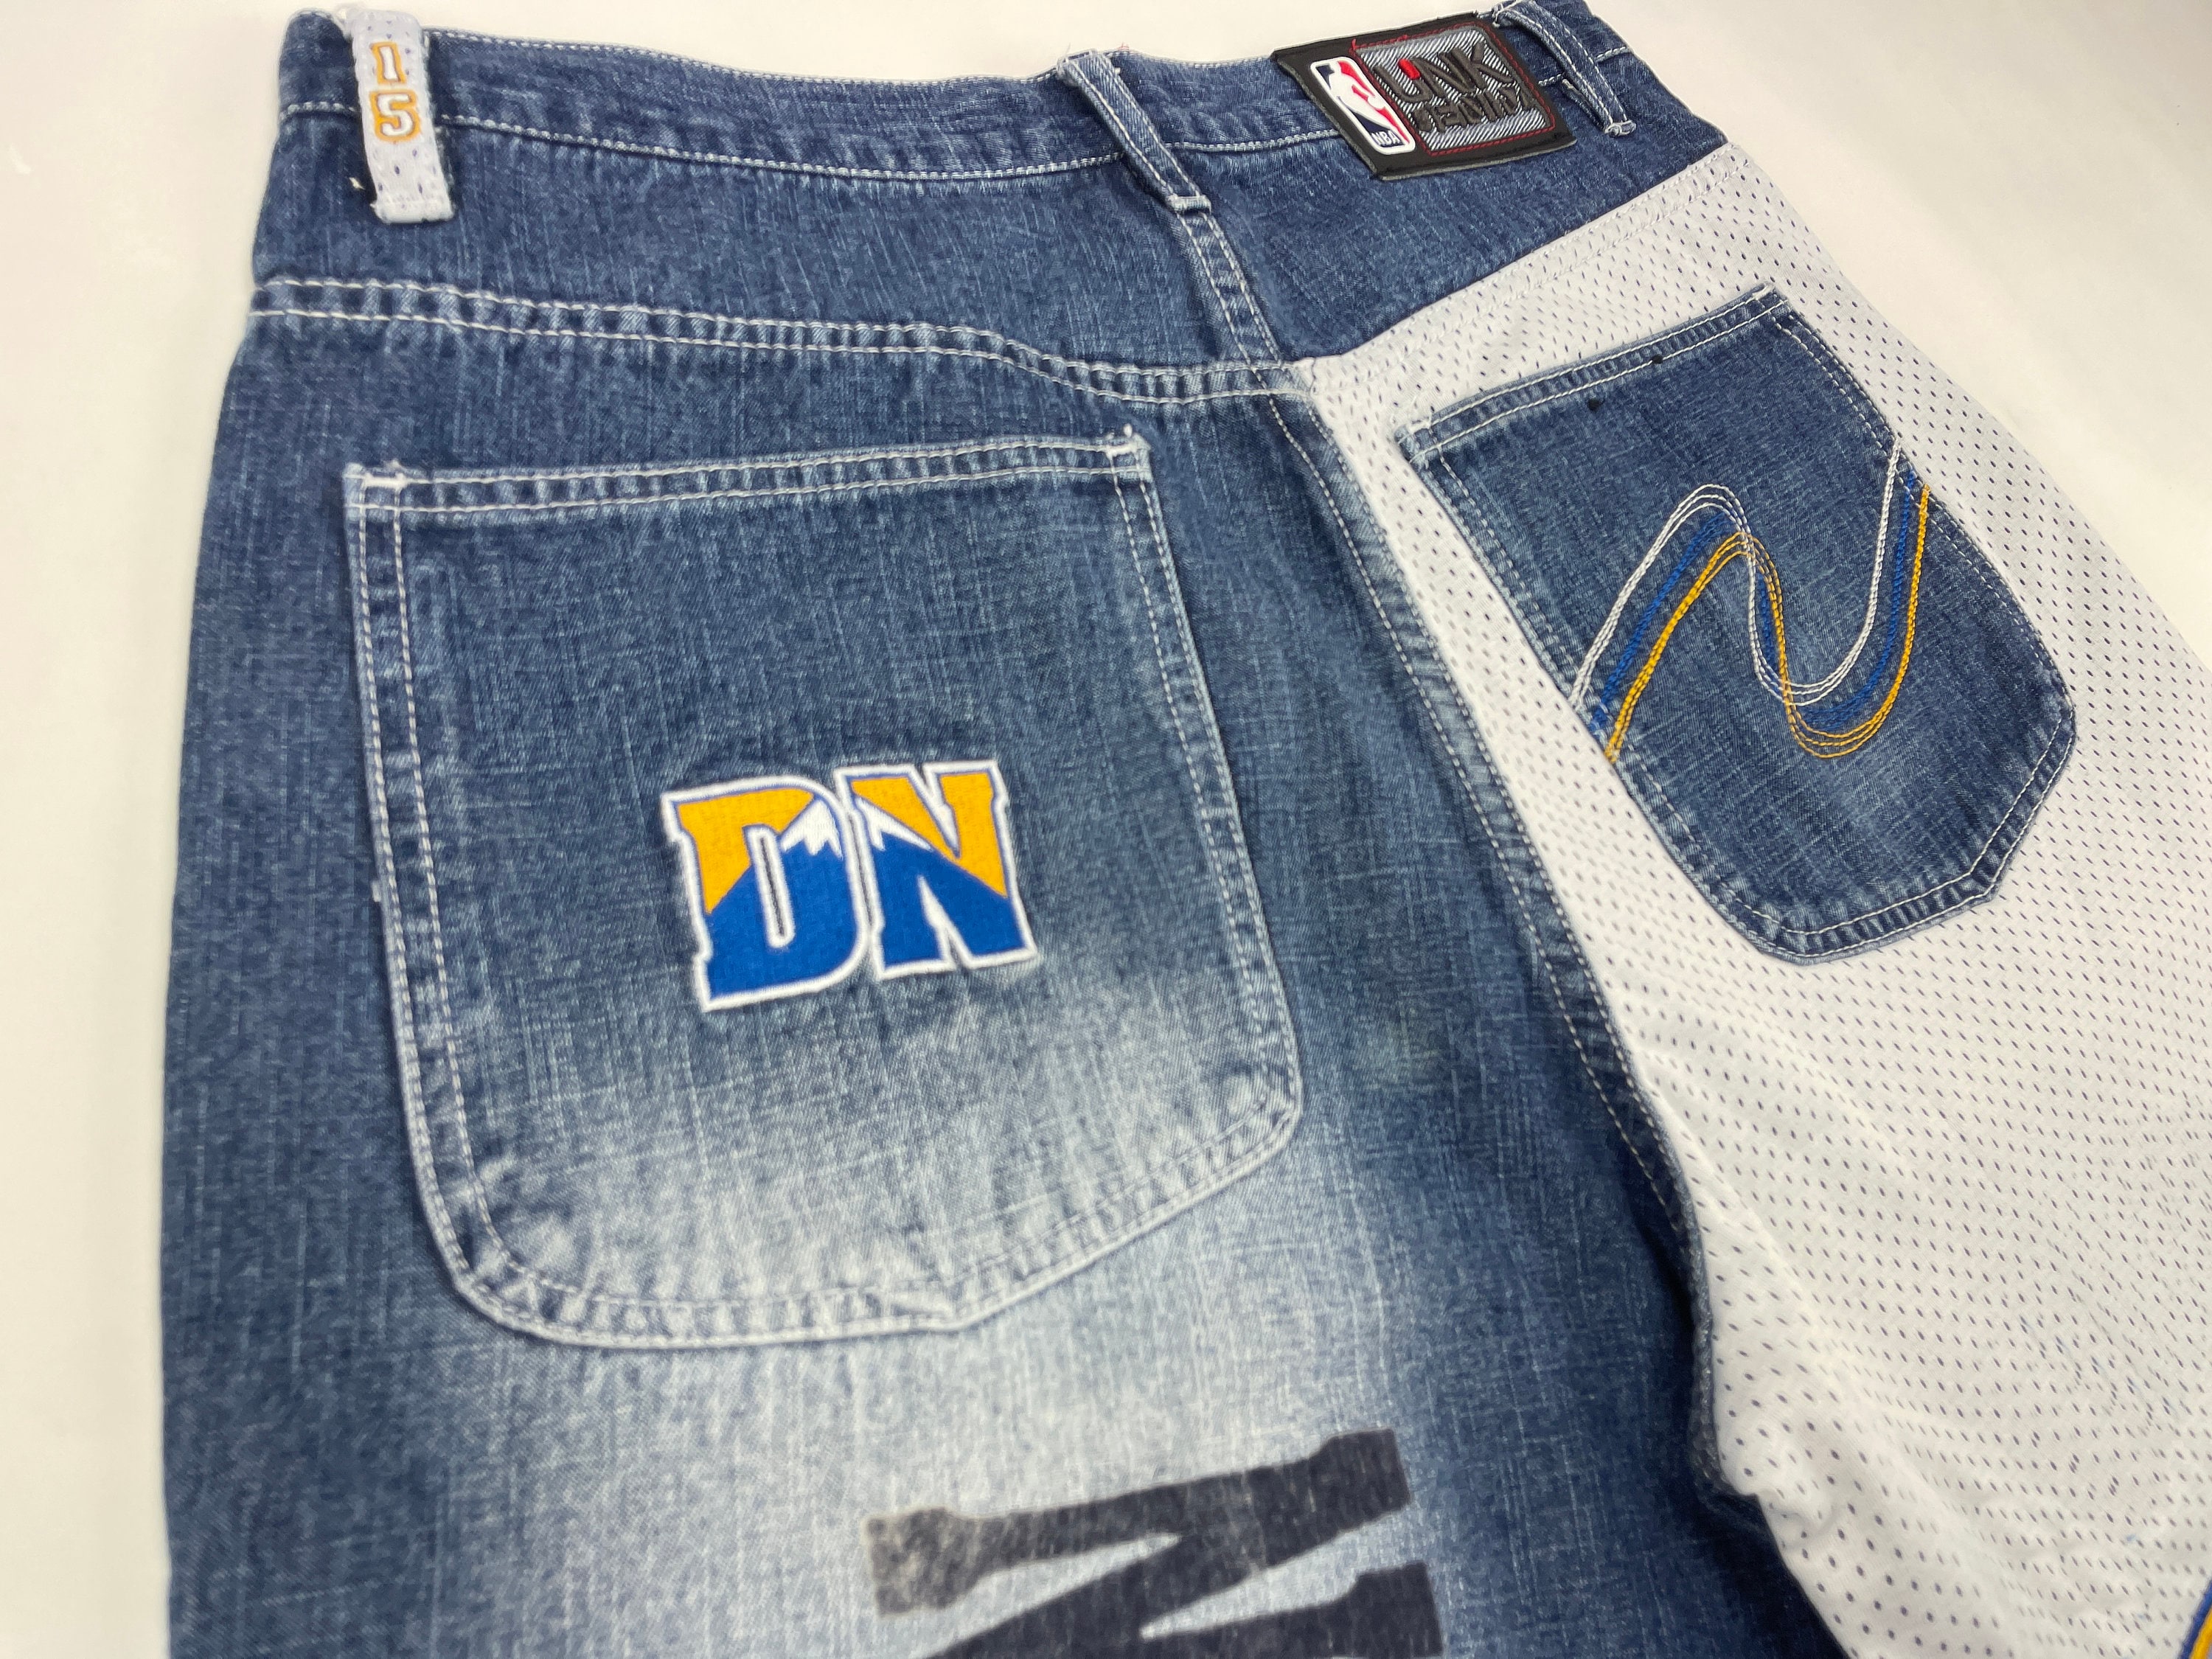 The Denver Nuggets Jeans